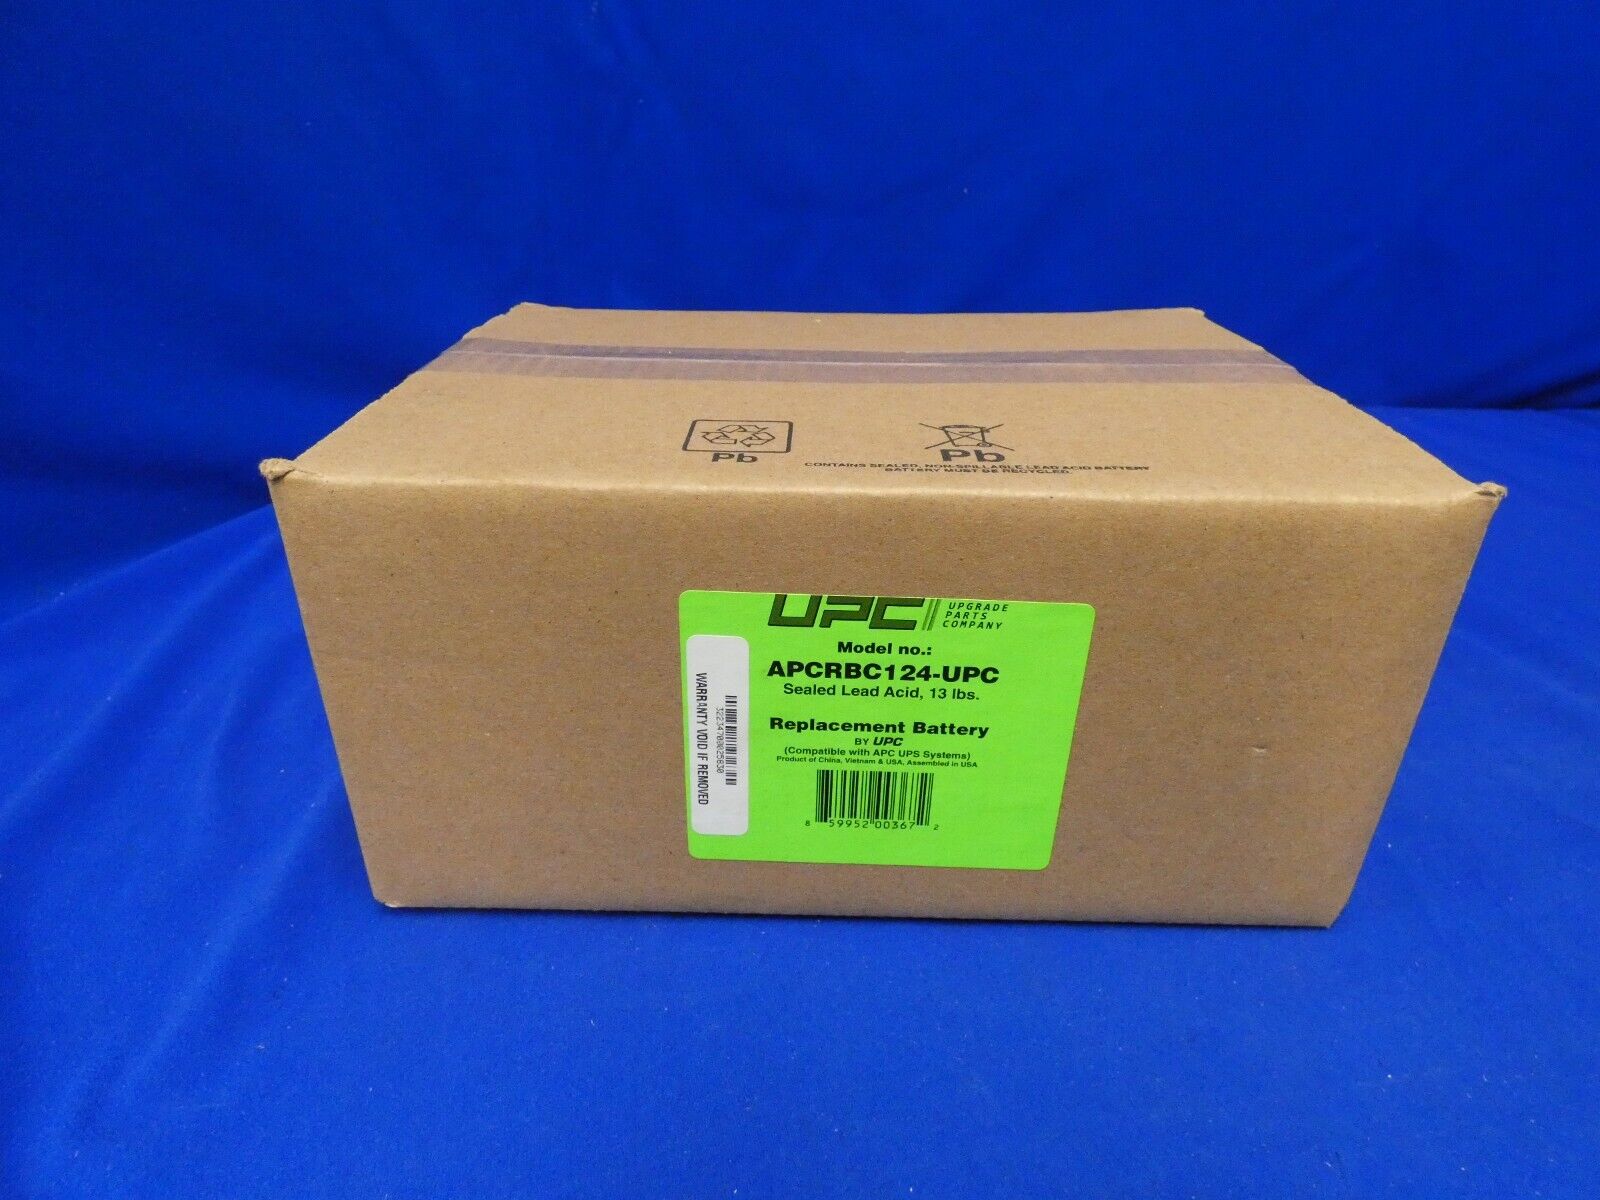 Upgrade Parts Company APCRBC124-UPC Replacement Battery (new-sealed box)